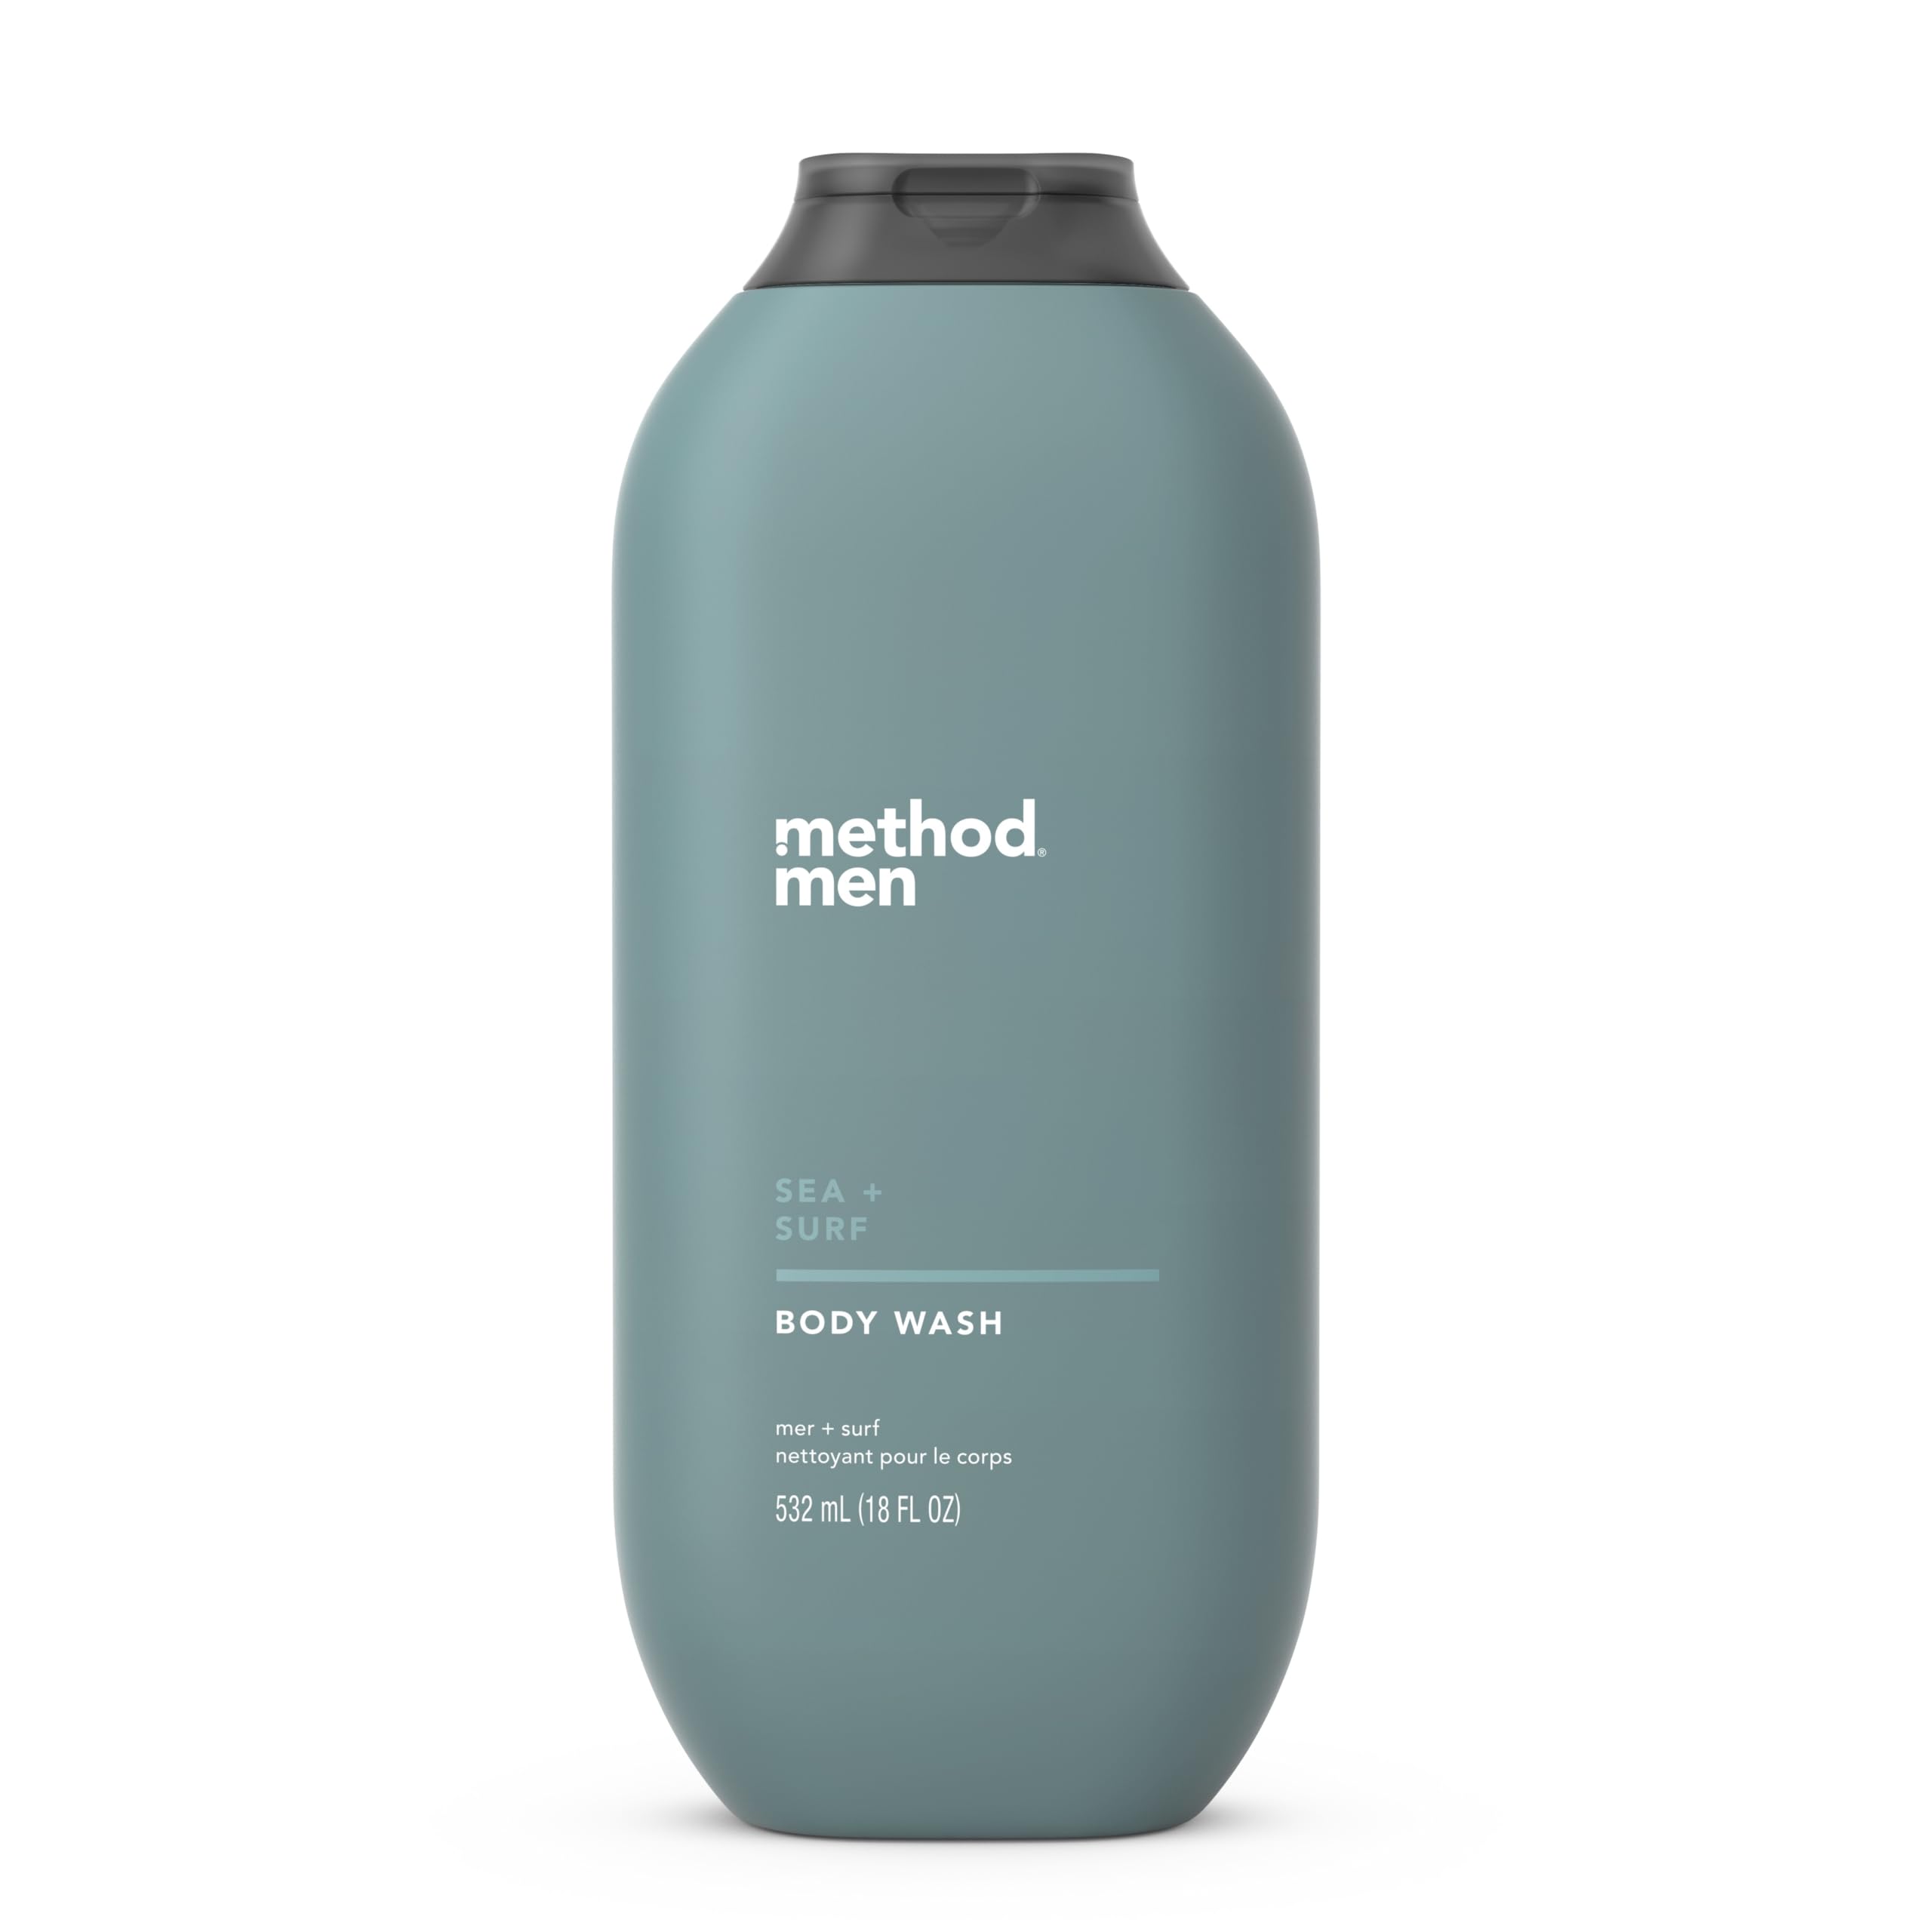 Method Men Body Wash, Sea + Surf, Paraben and Phthalate Free, 18 fl oz (Pack of 1)